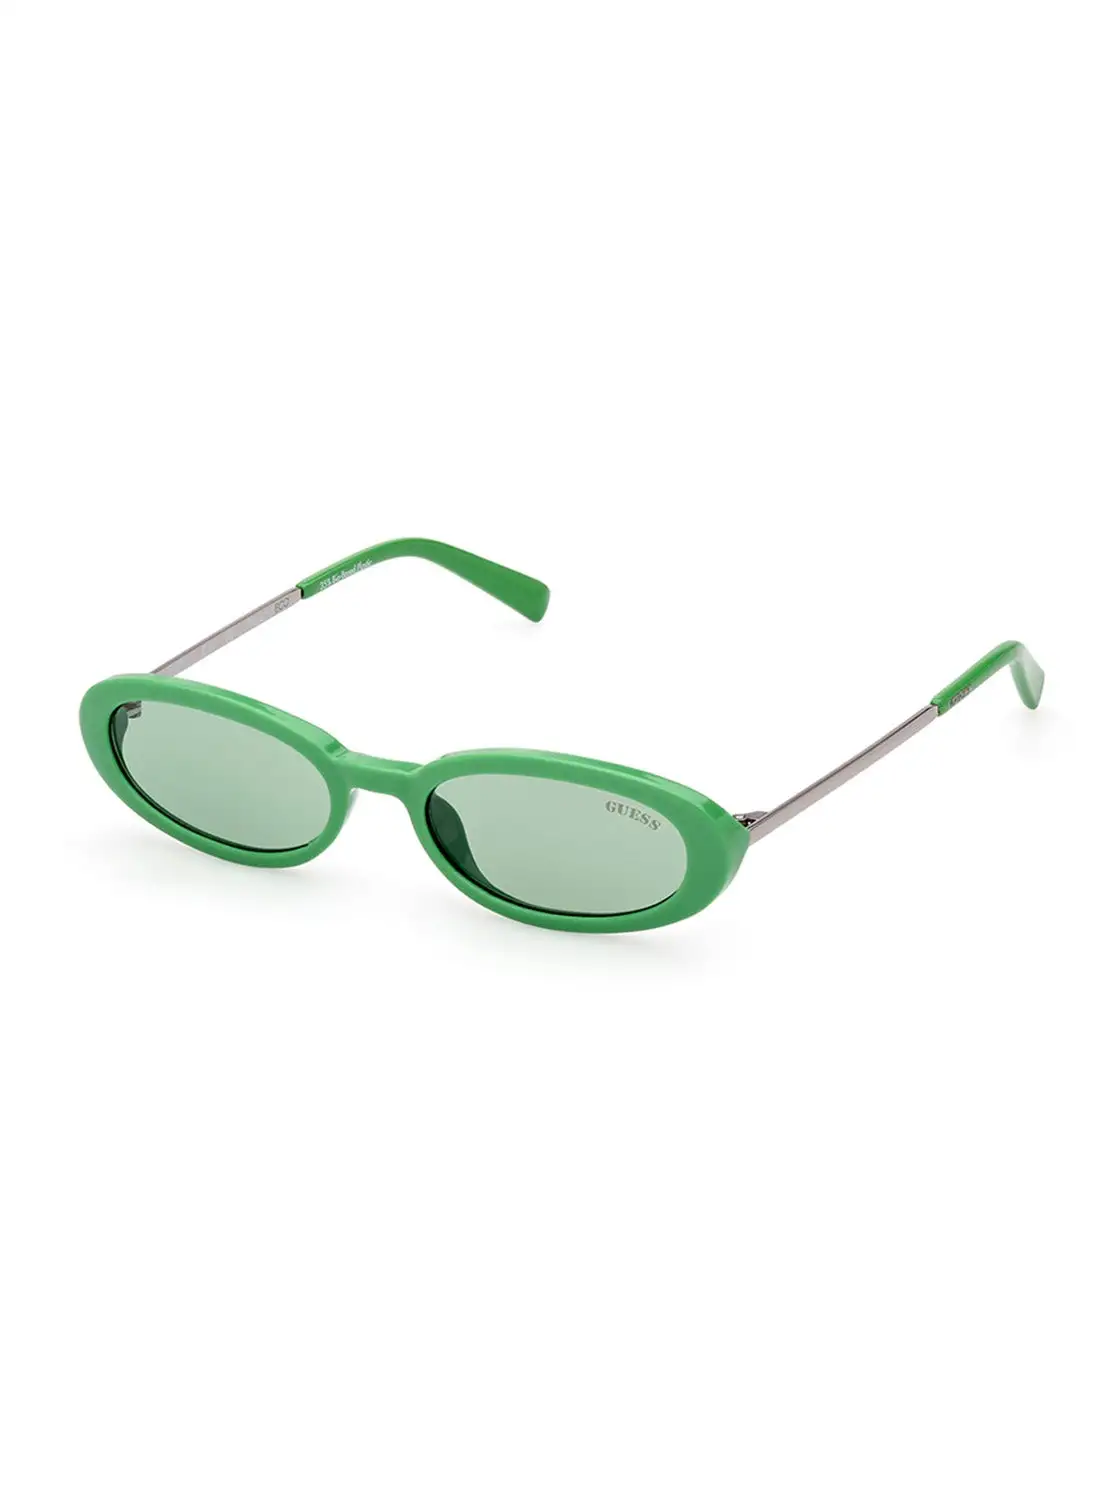 GUESS Unisex UV Protection Oval Shape Sunglasses - GU827793N51 - Lens Size: 51 Mm